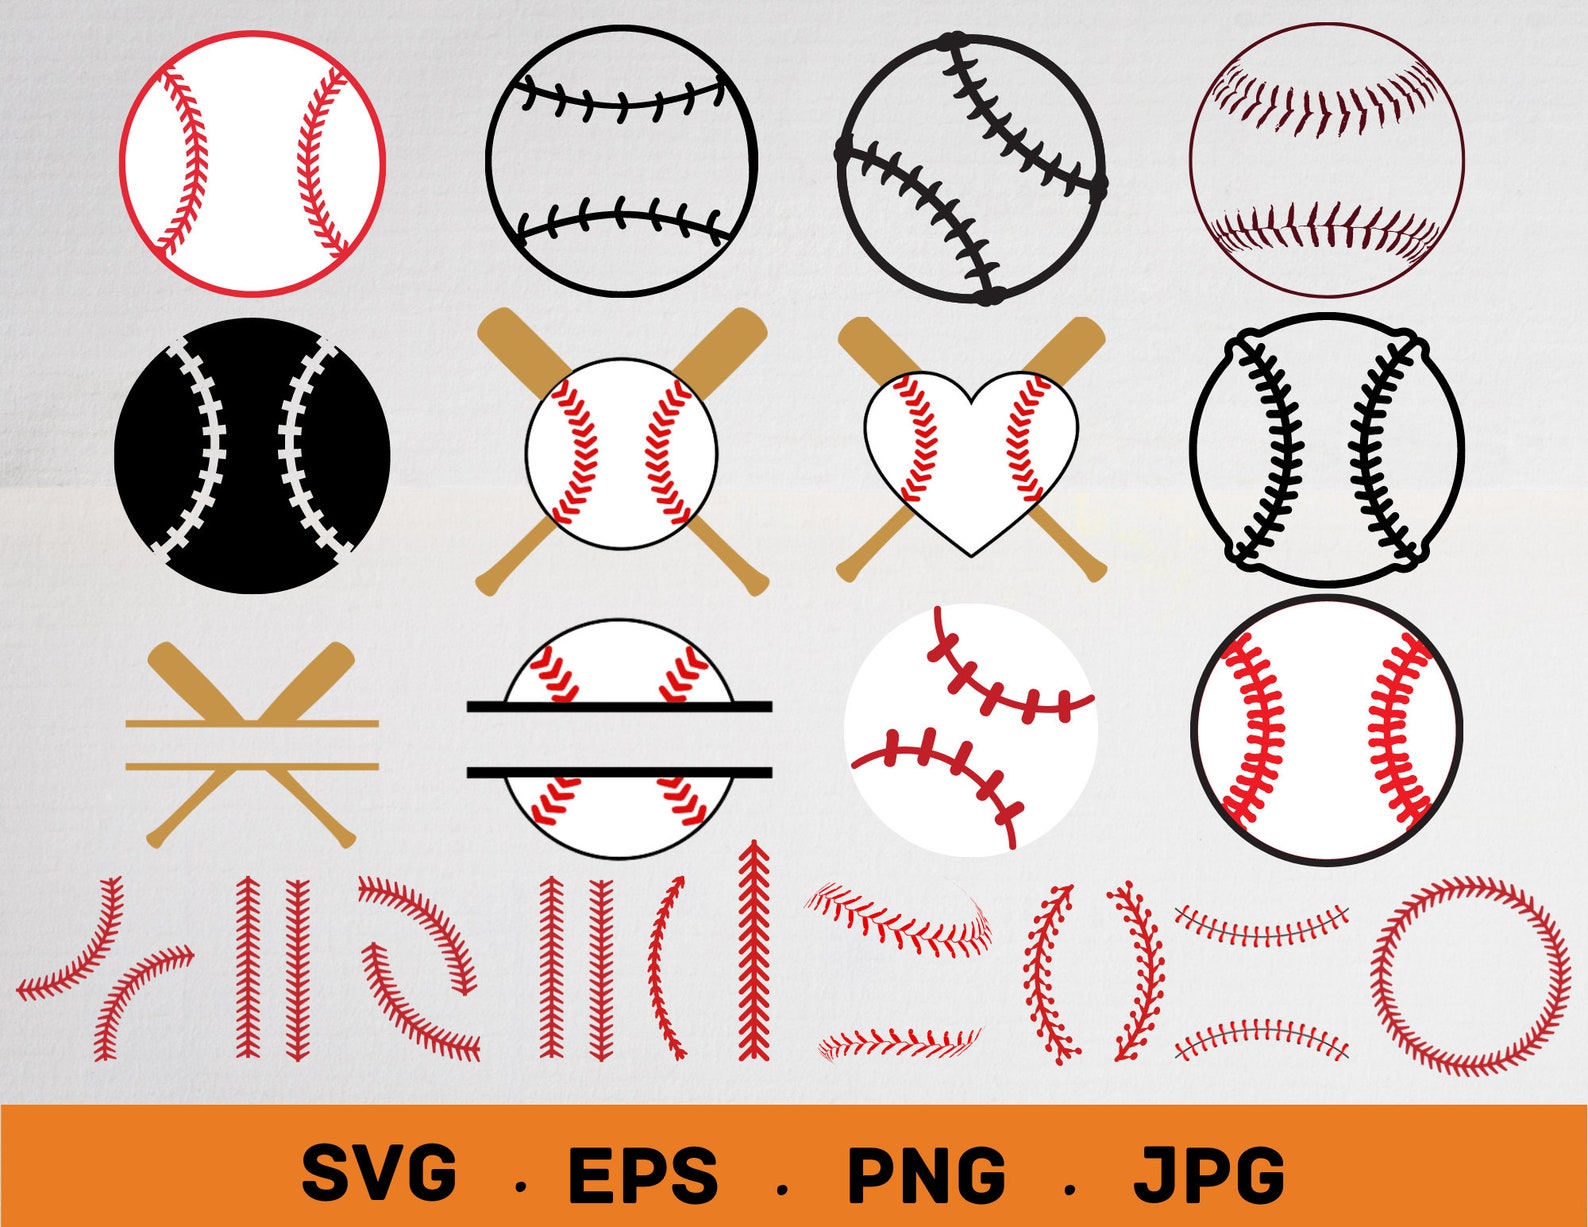 Diverse of baseball symbols.